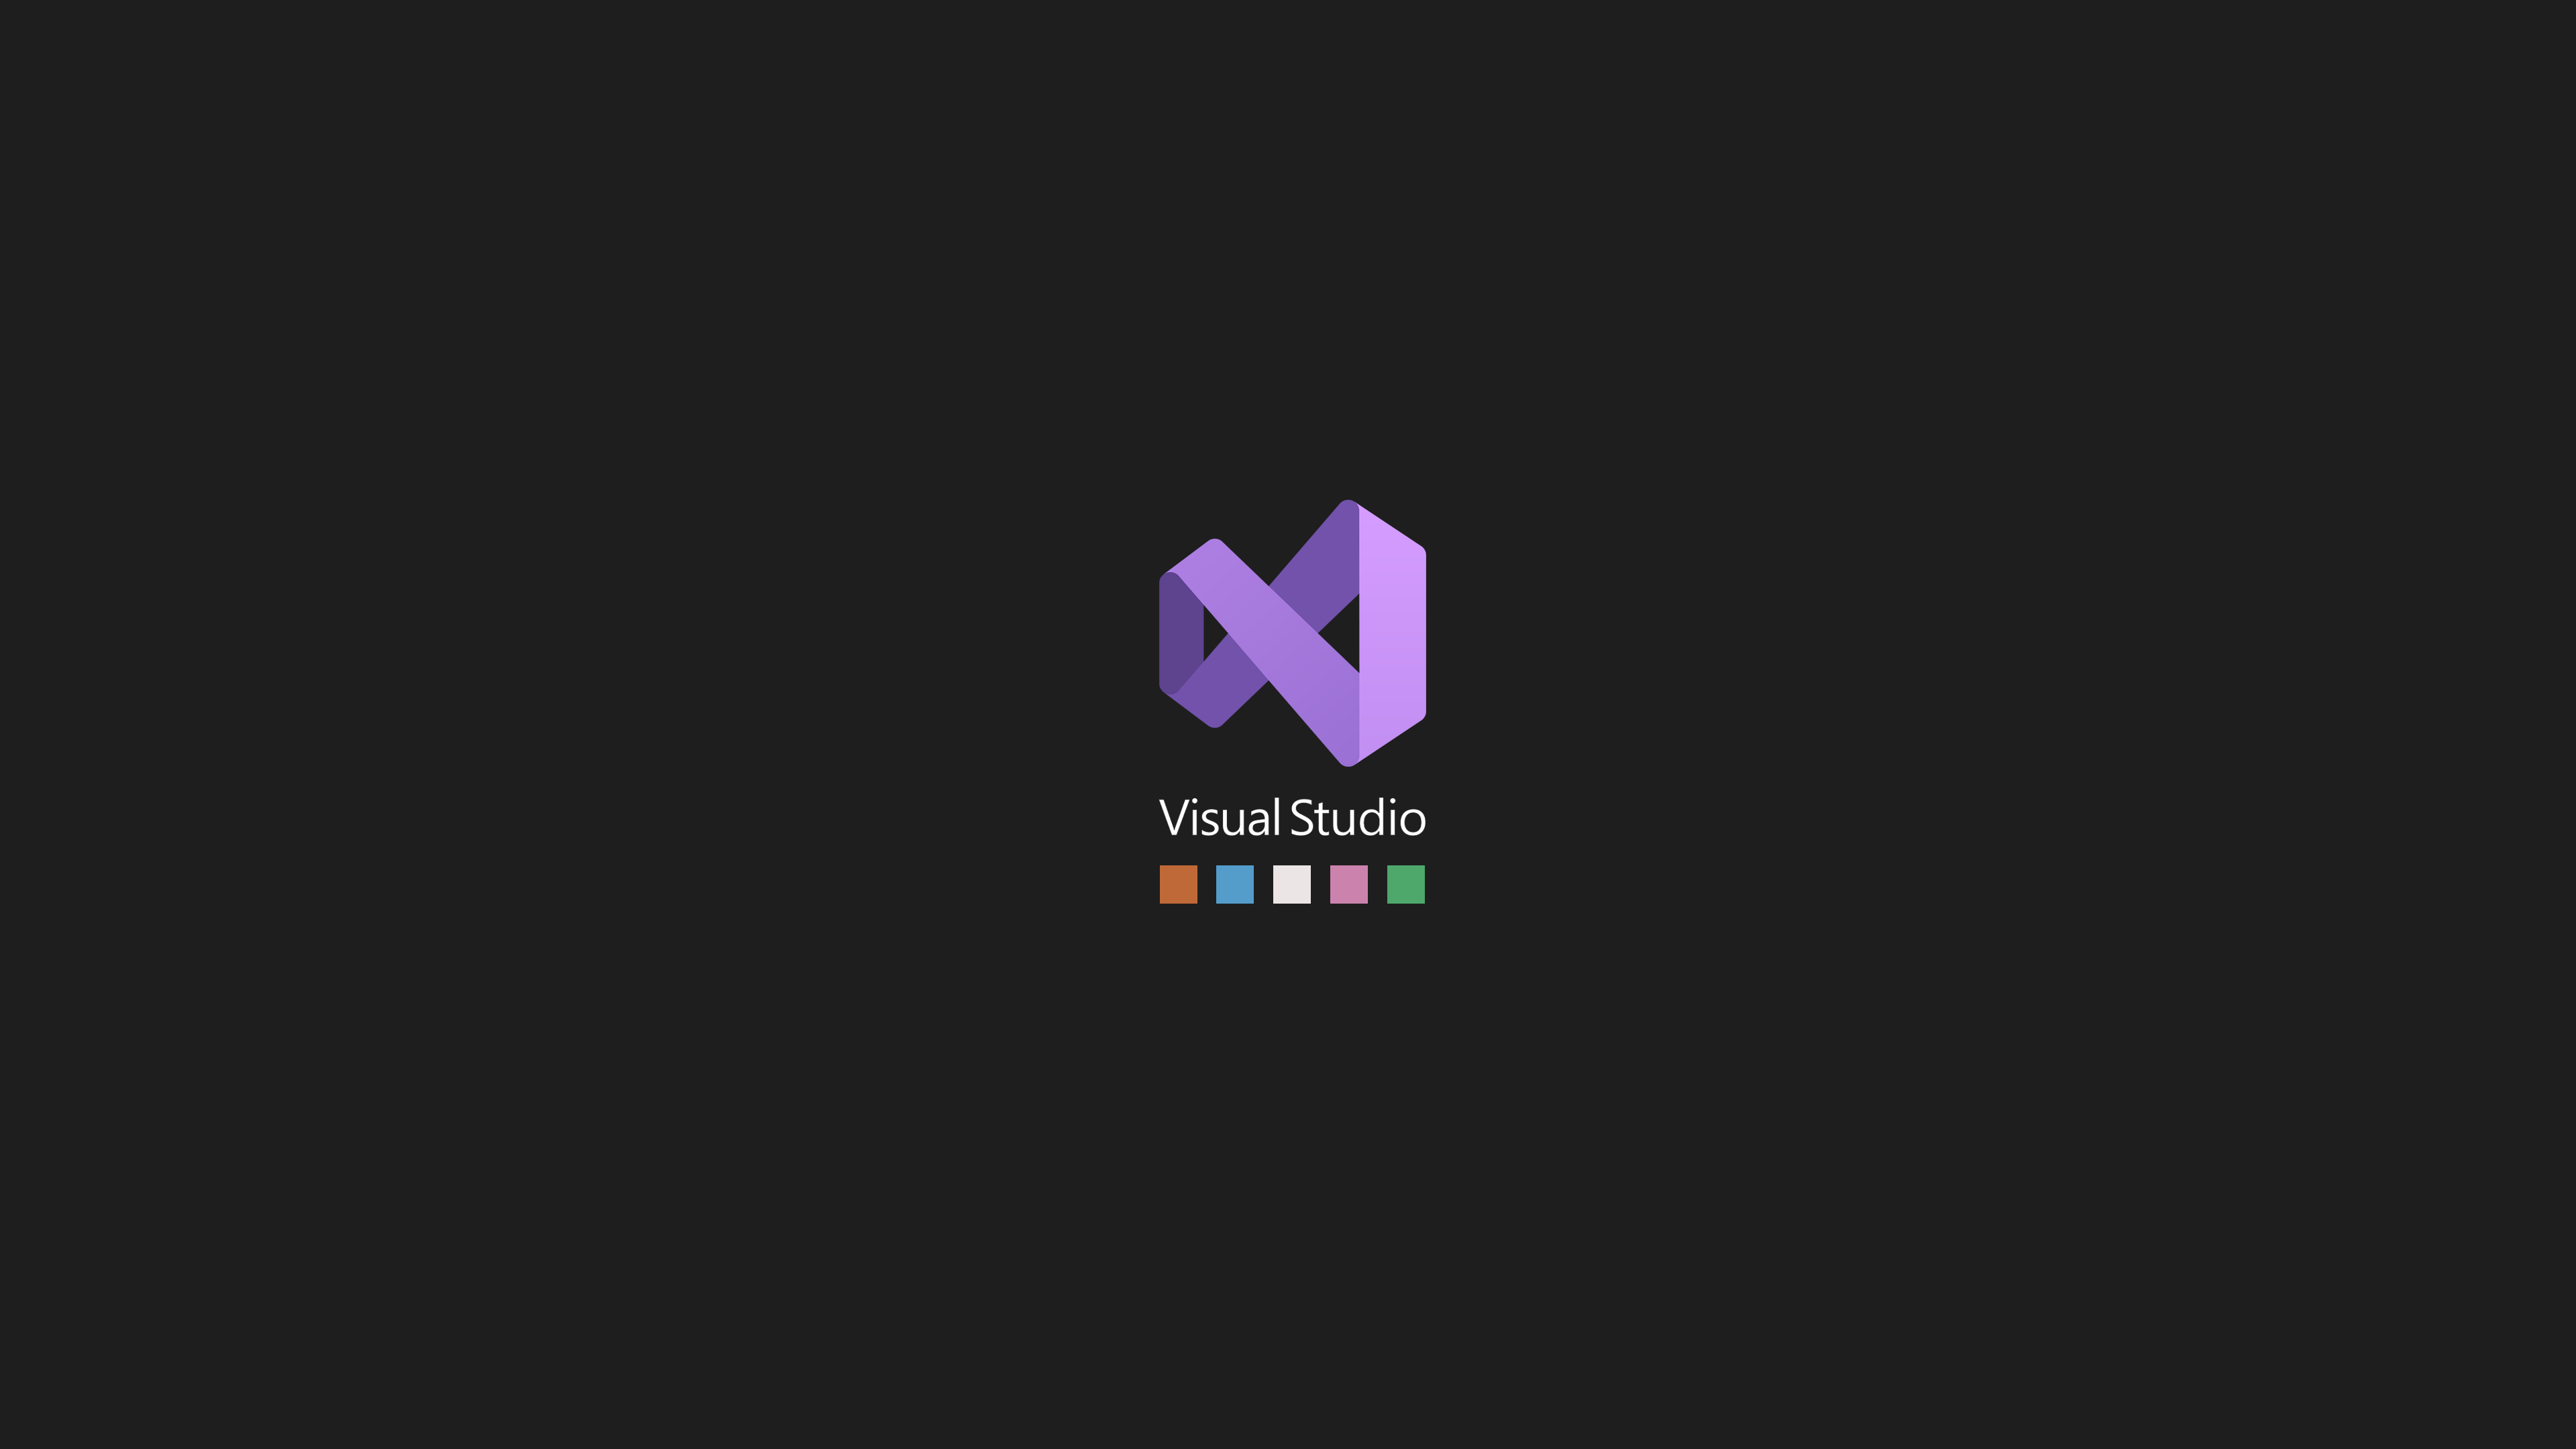 Visual Studio Microsoft Programming Software Minimalism Simple Background Logo 3840x2160